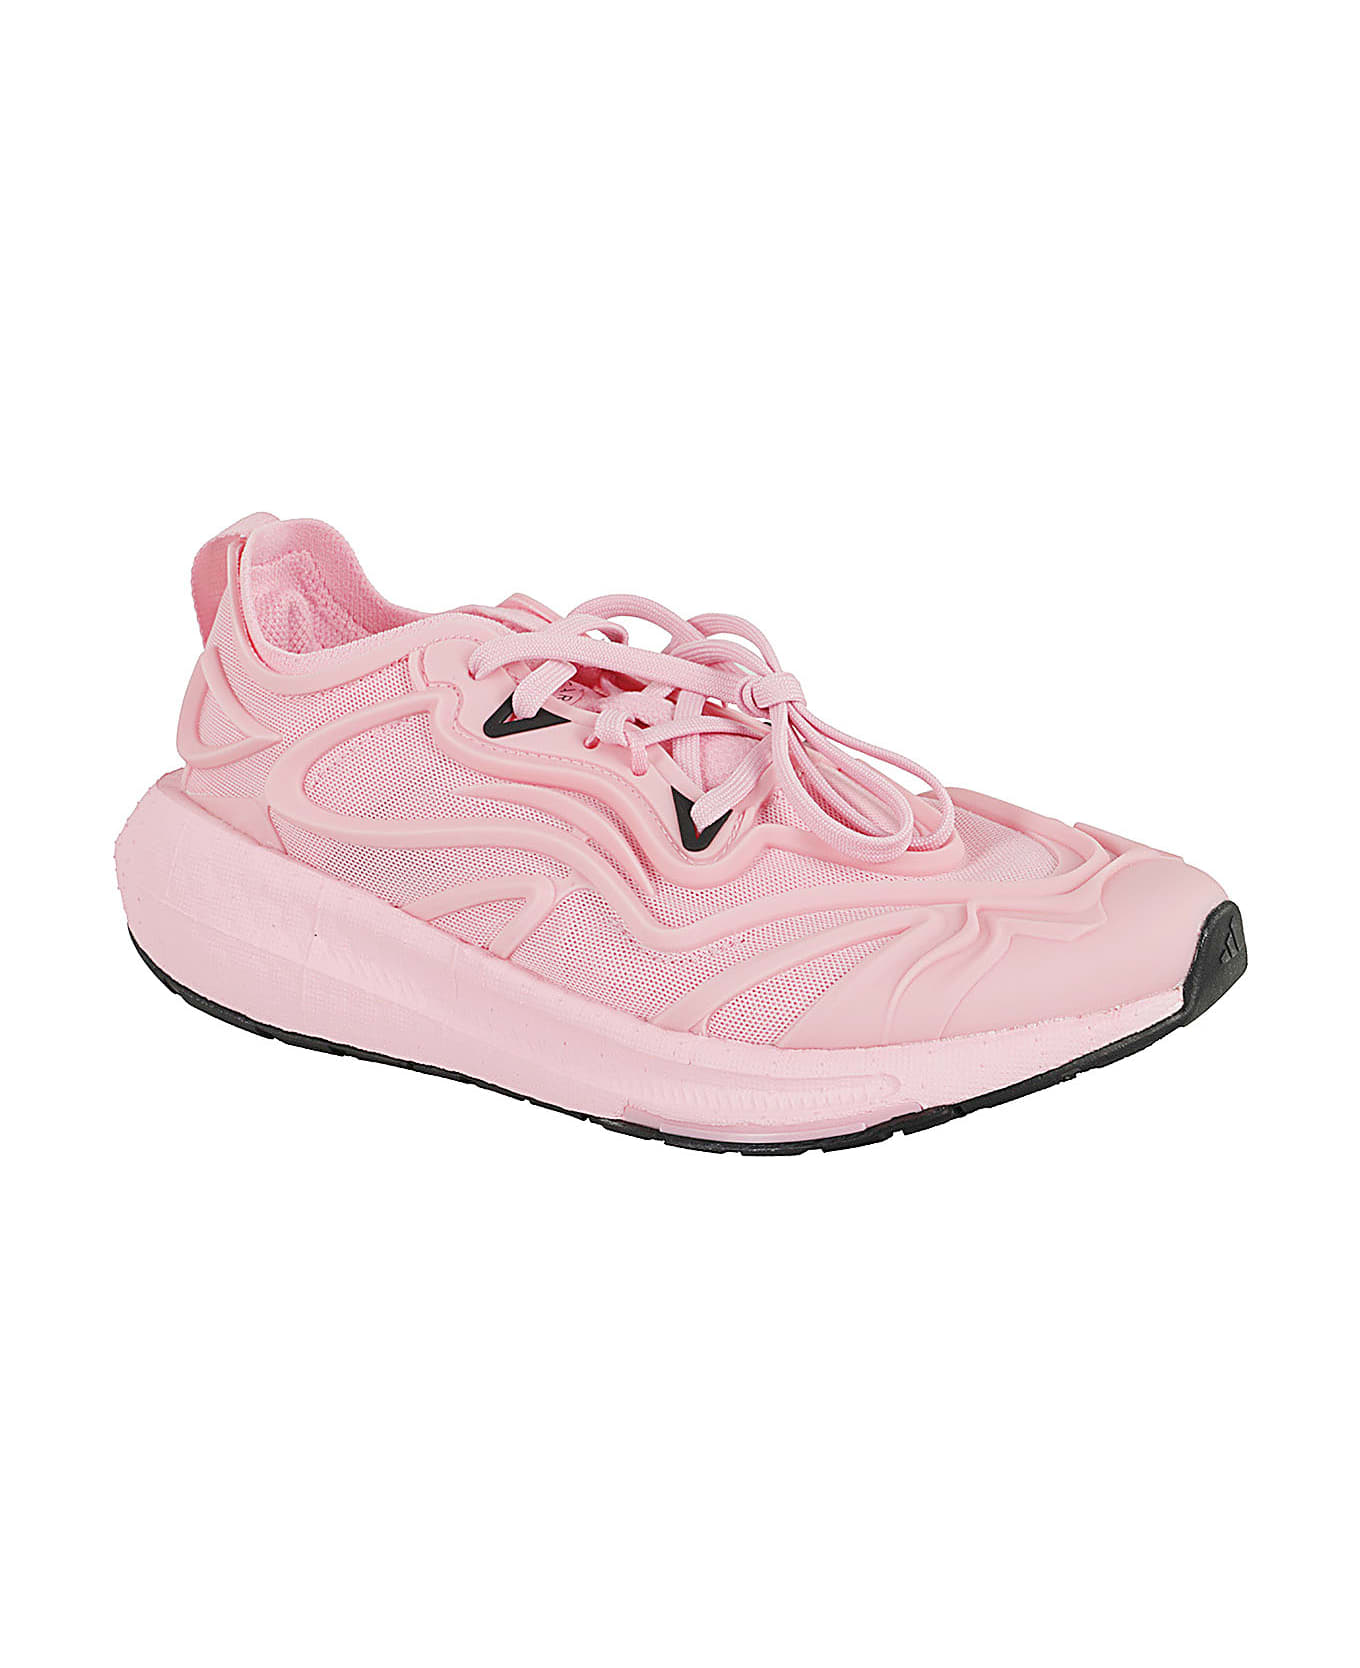 Adidas by Stella McCartney Ultraboost Speed - Pink